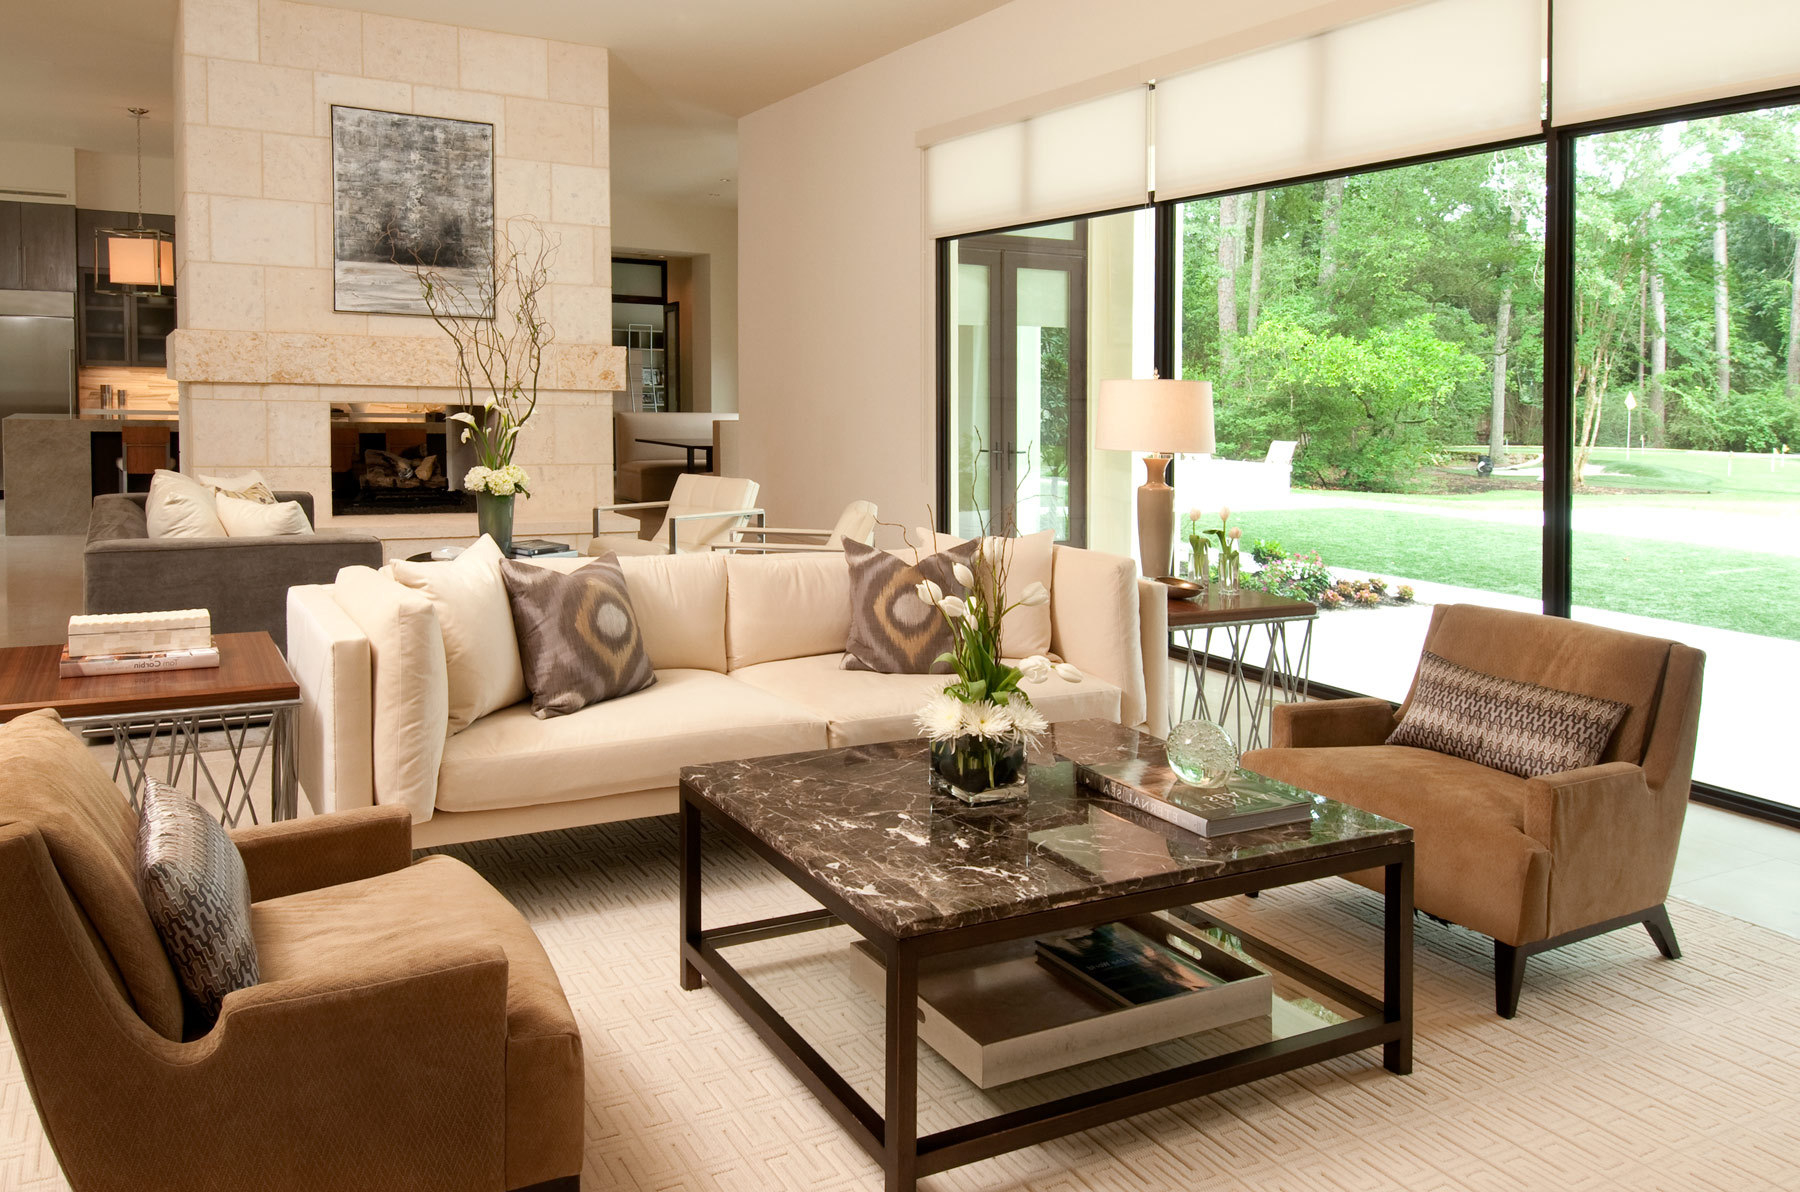 27 Comfortable Living Room Design Ideas - Decoration Love